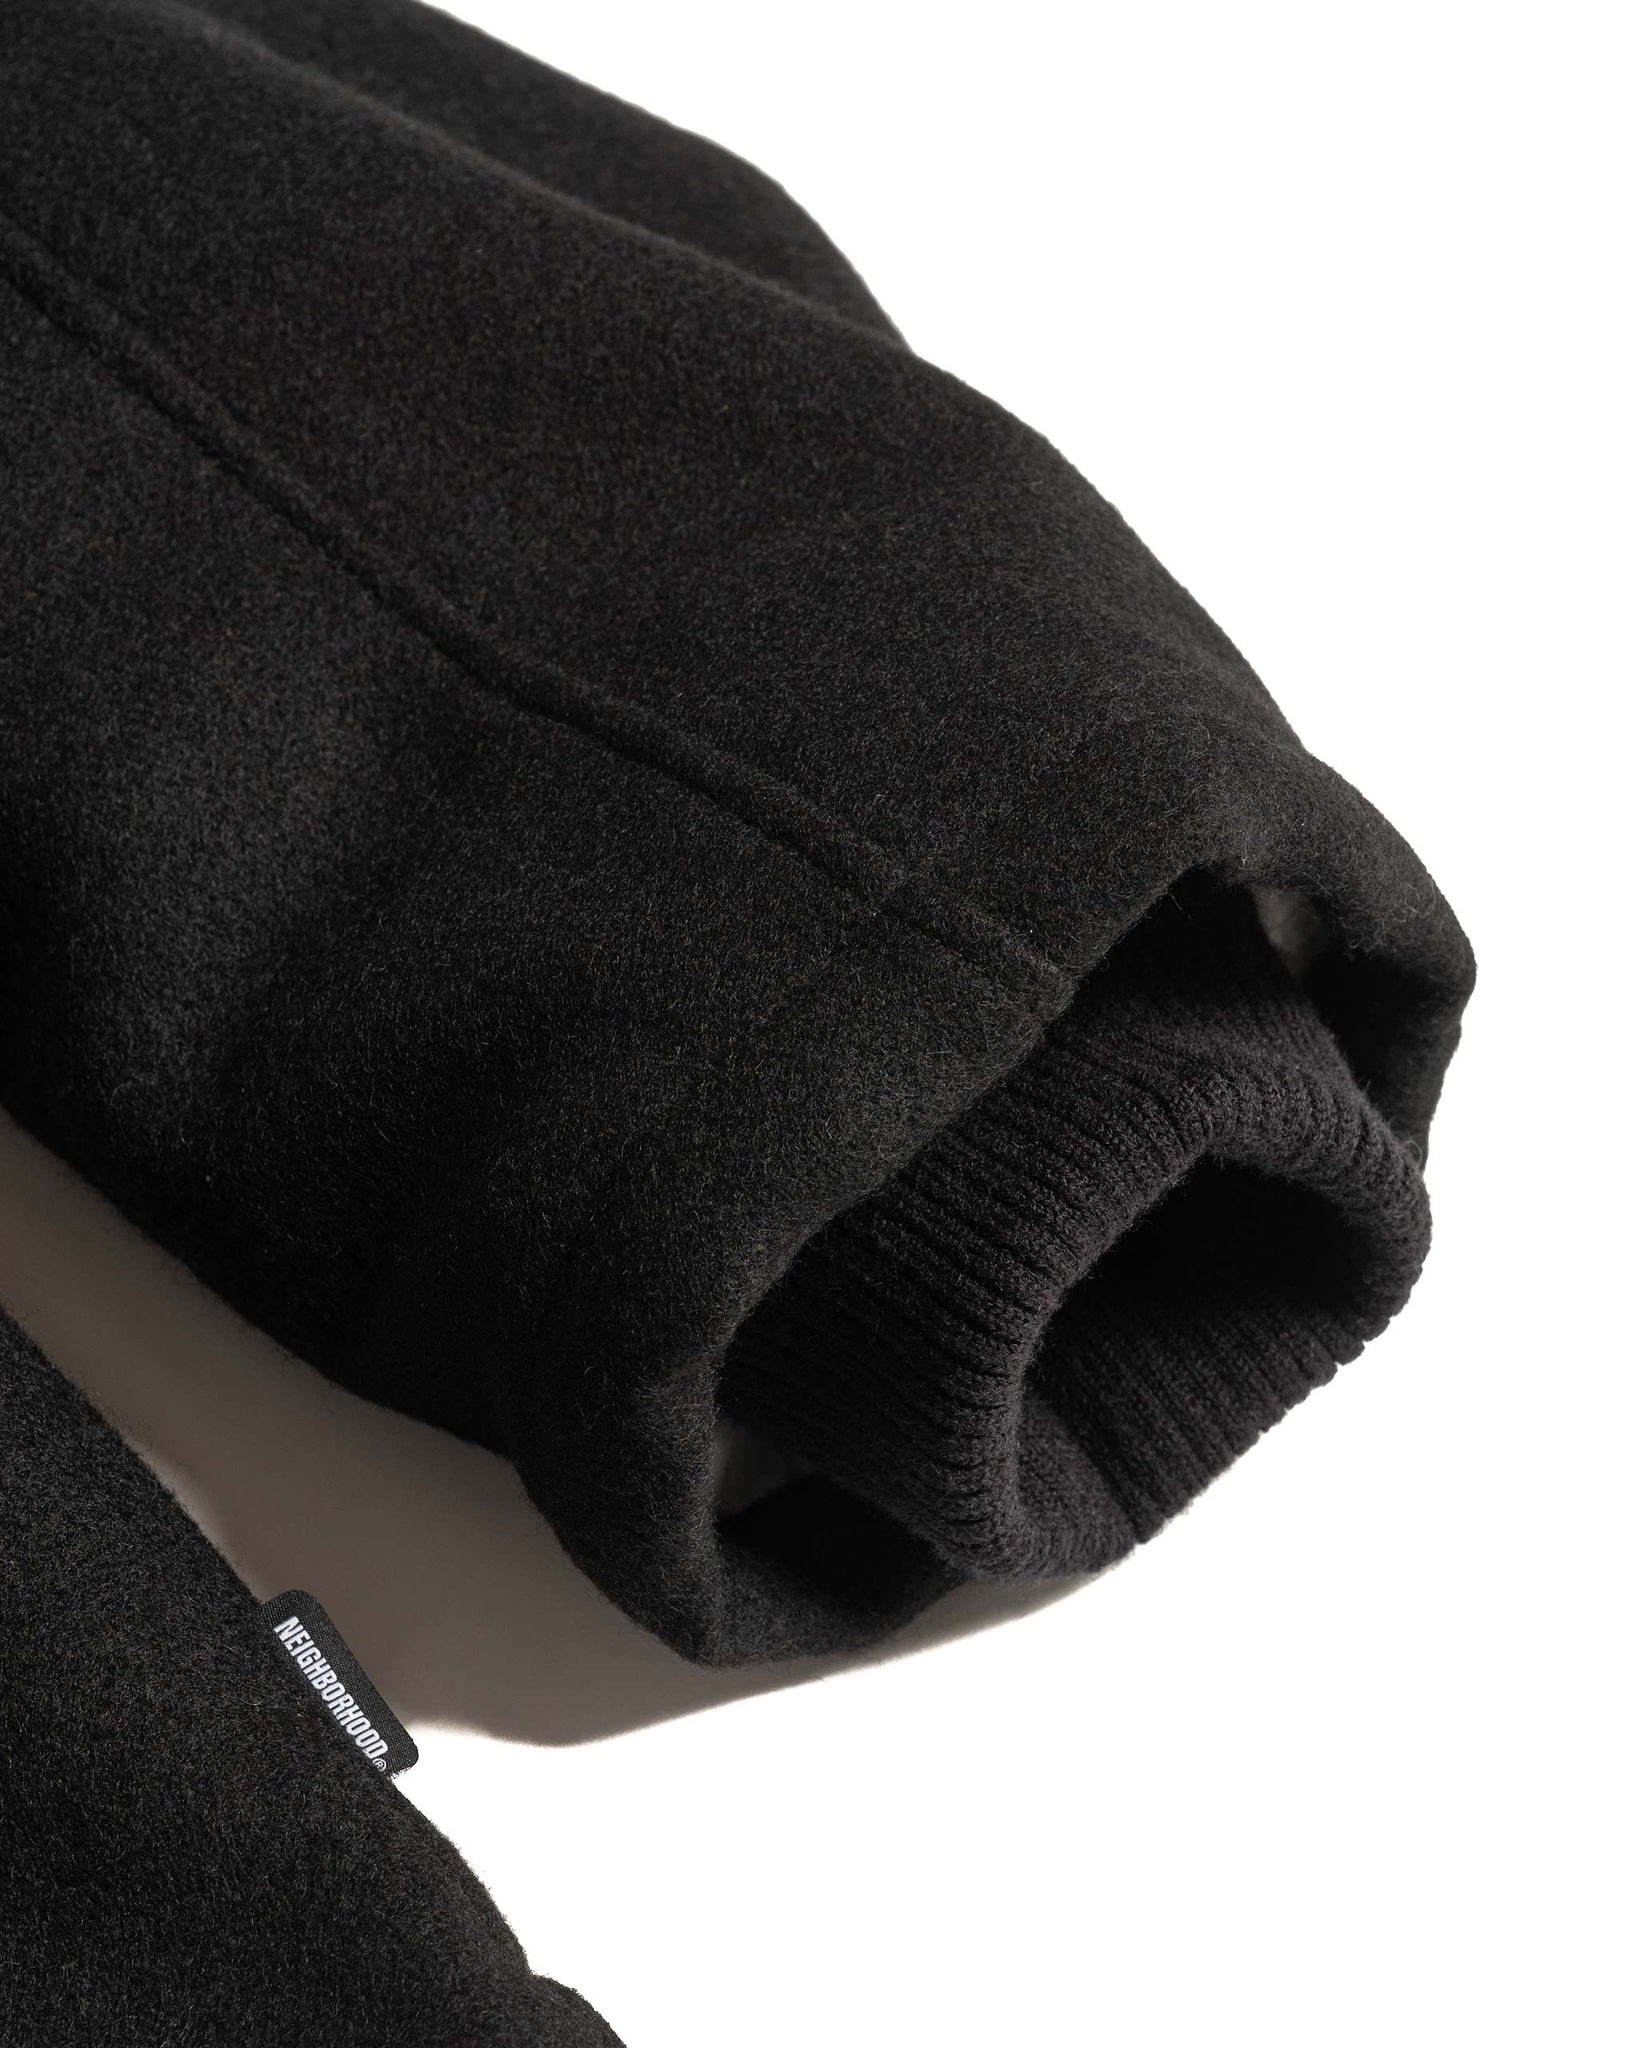 NEIGHBORHOOD Melton Zip Up Jacket Black | REVERSIBLE